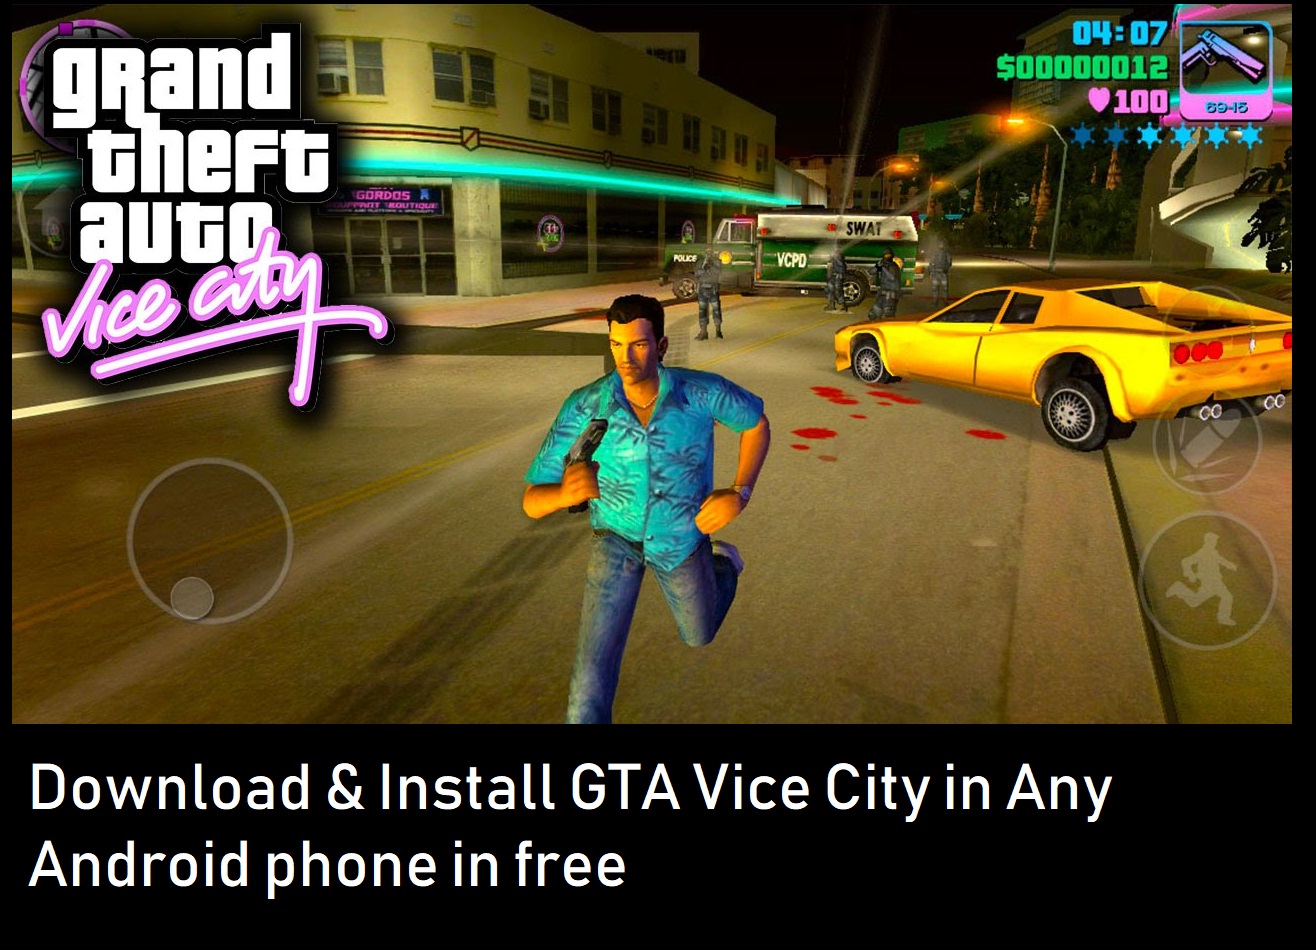 gta vice city mobile game free mobile9